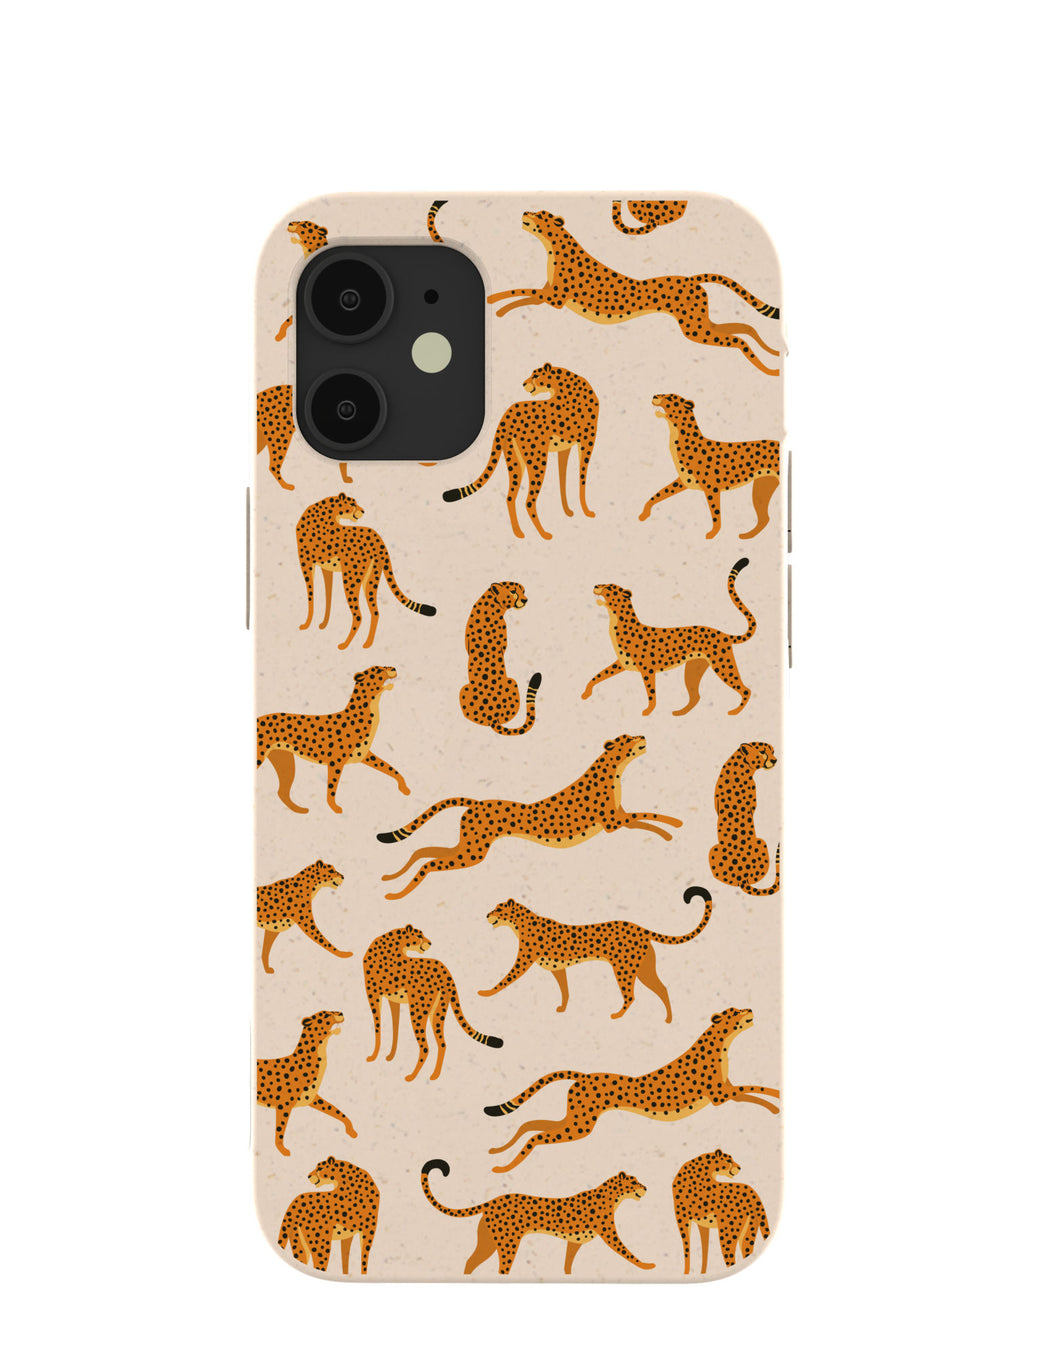 Seashell Wild Cats iPhone 12 Mini Case